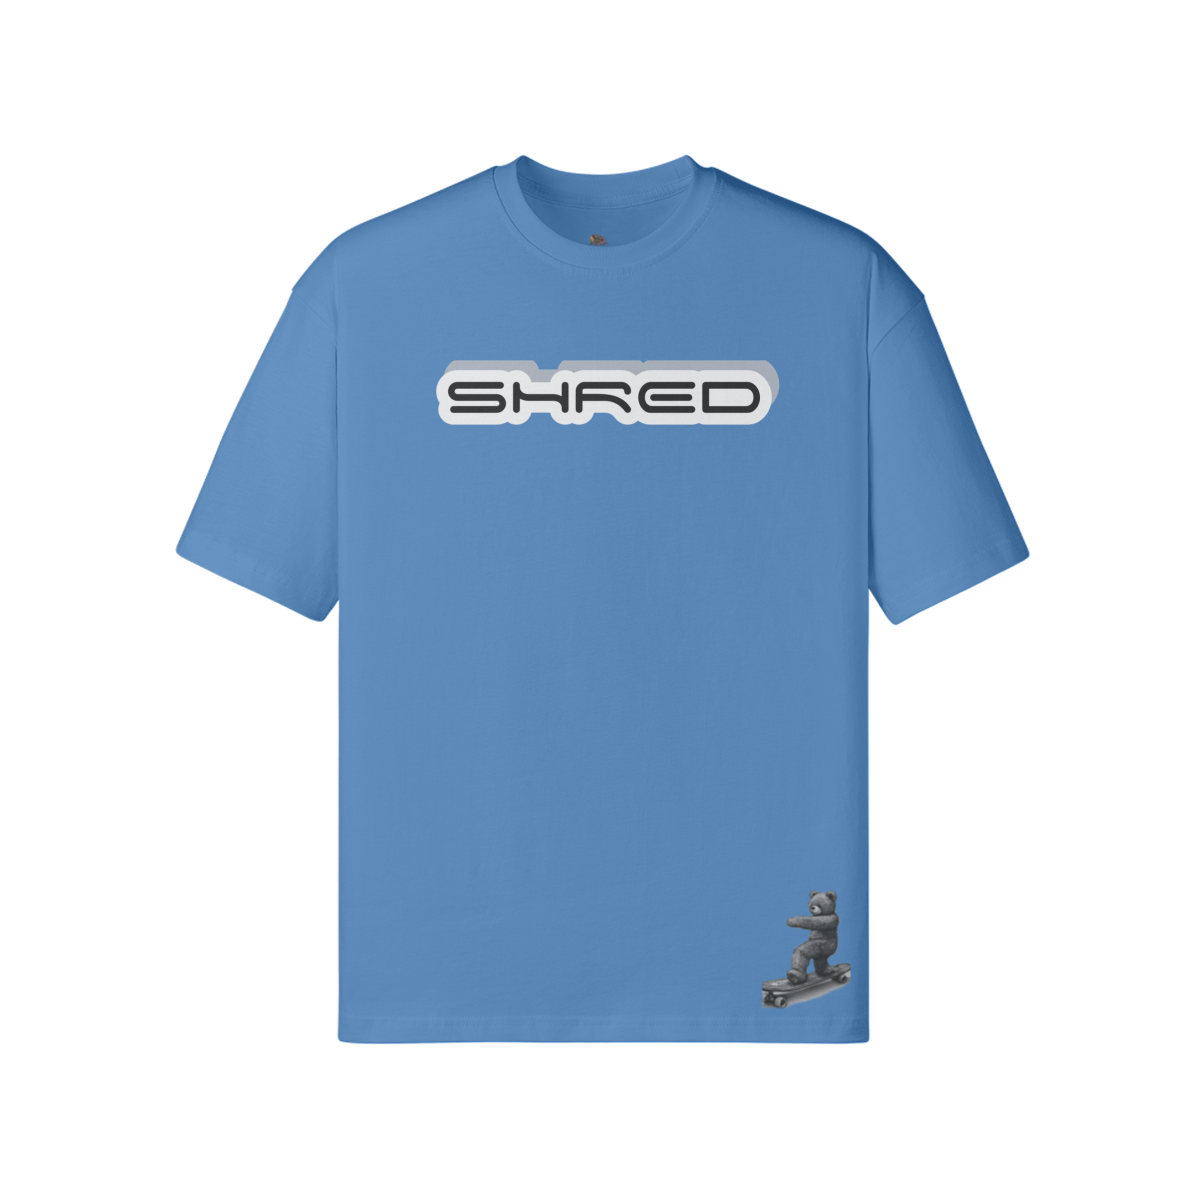 MEDIUM BLUE - Teddy Ride Shred 190GSM Unisex Loose T-shirt - Unisex T-Shirt at TFC&H Co.